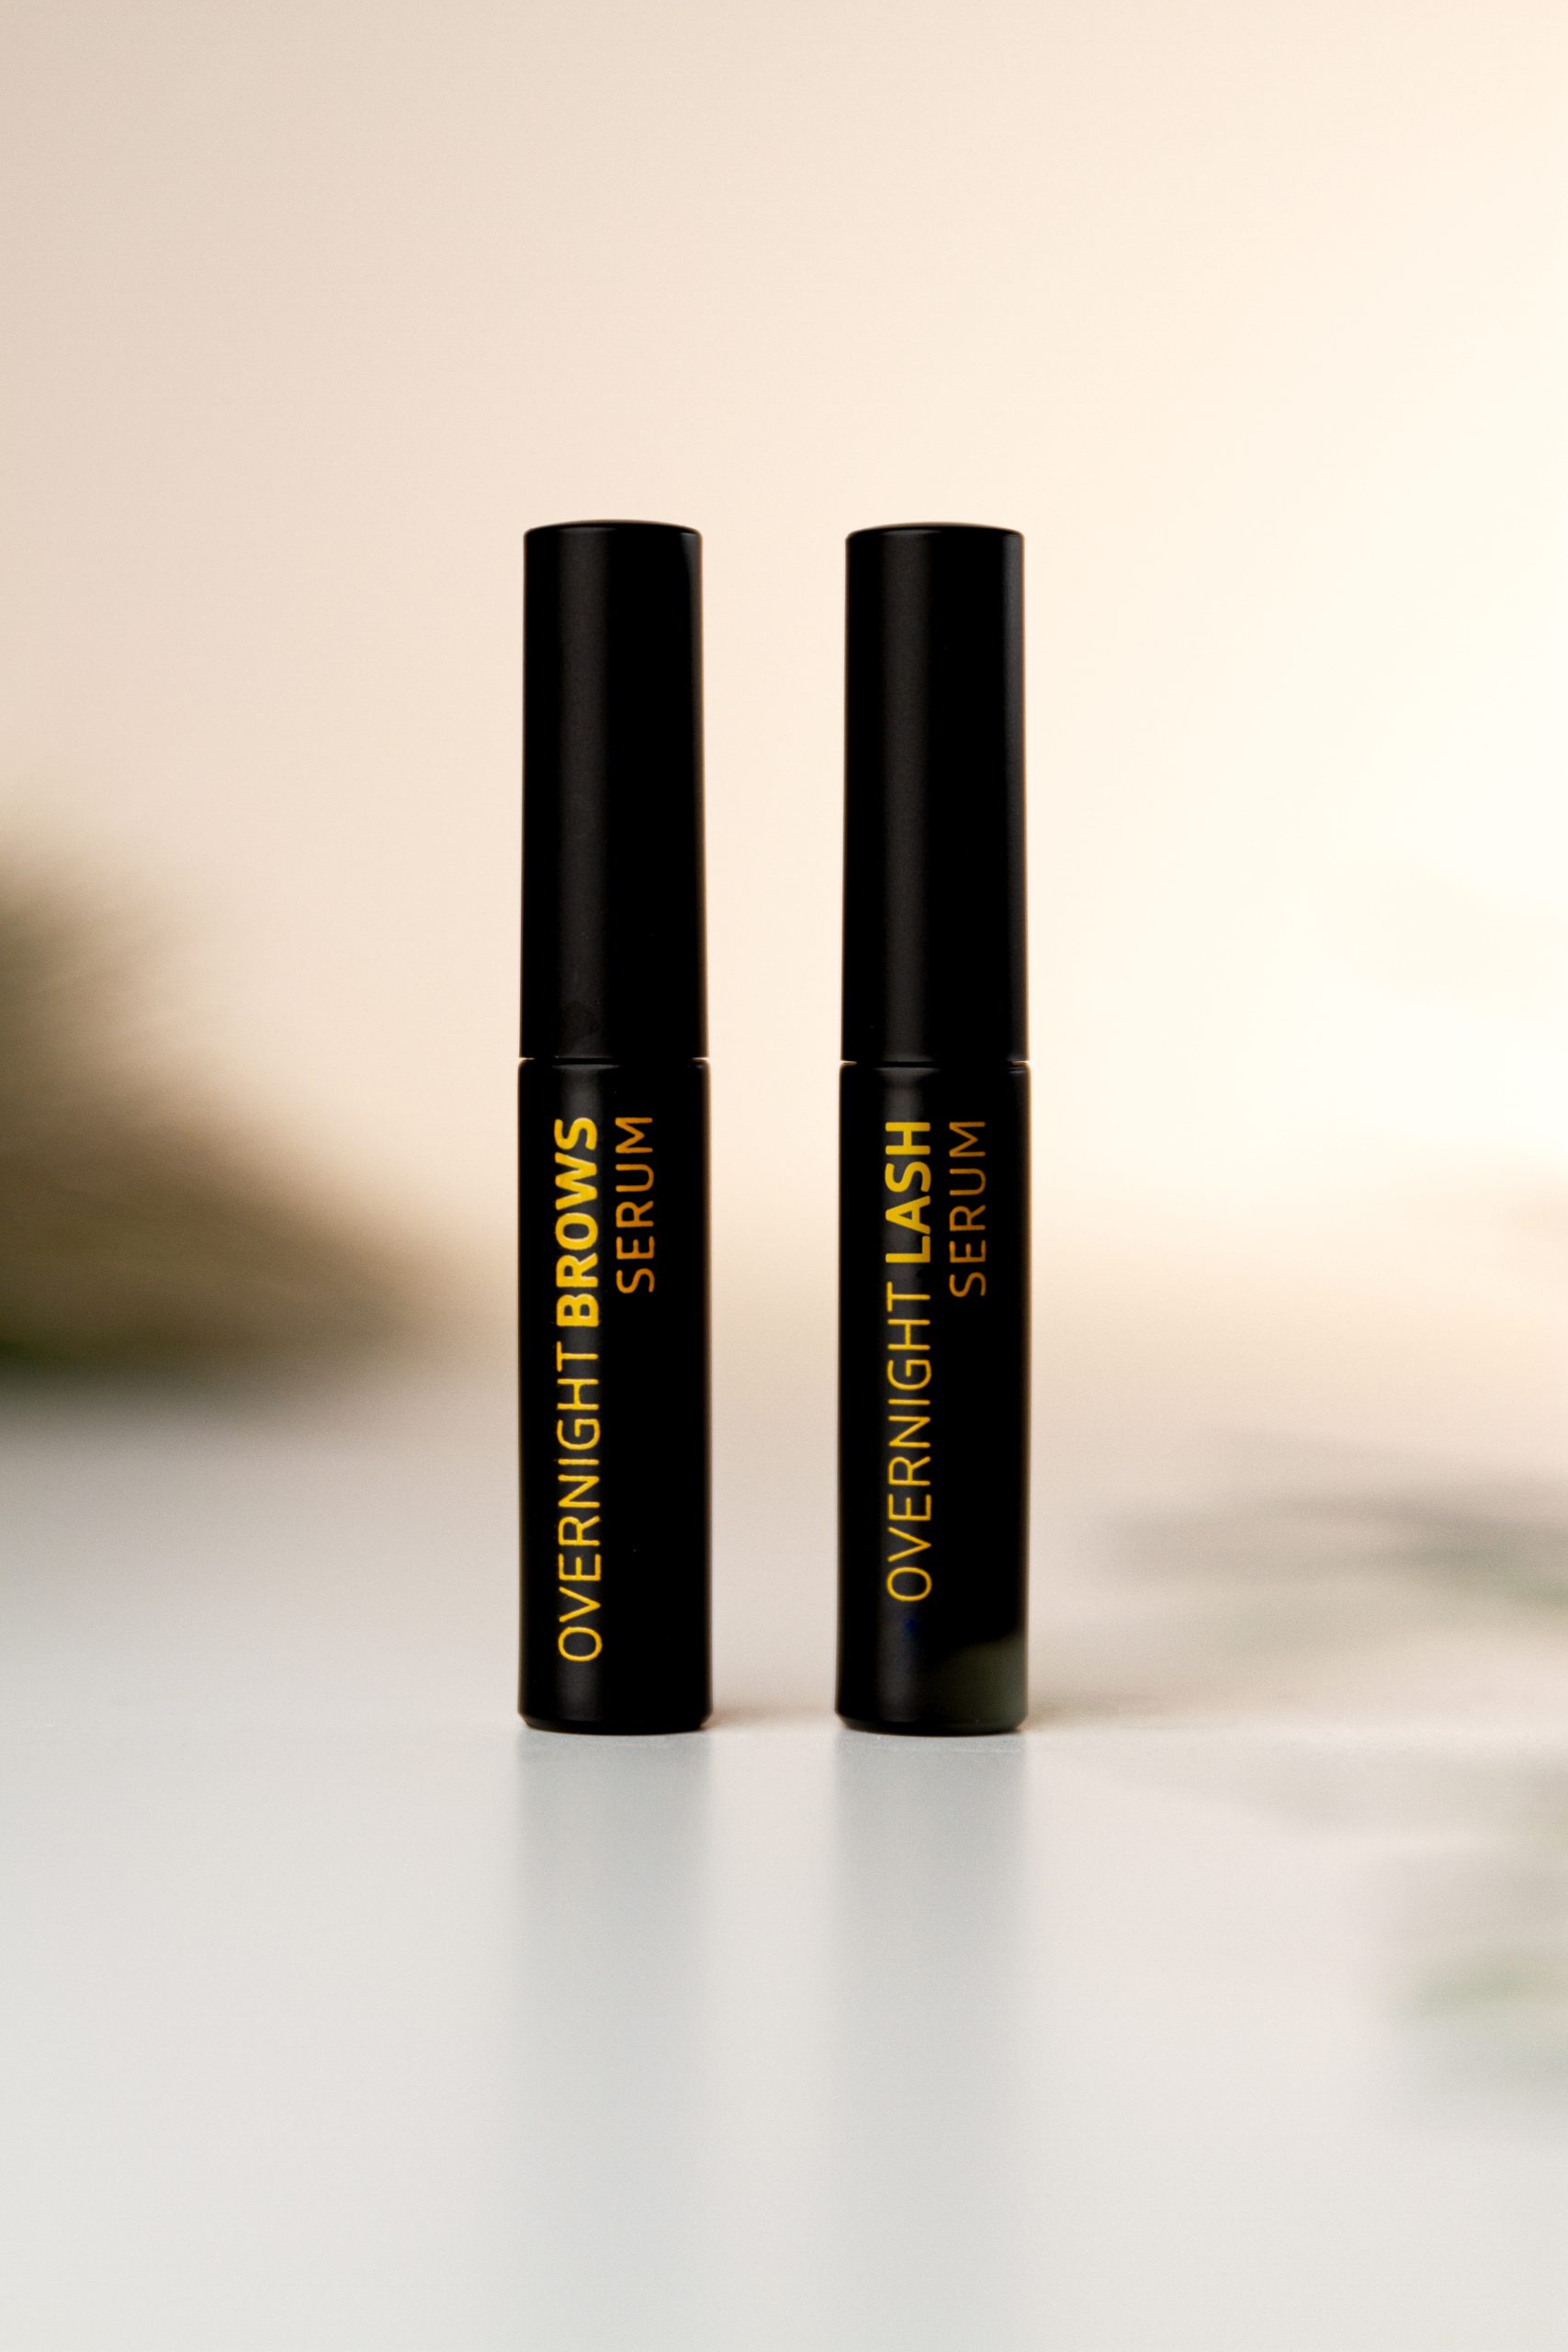 Two black lip balm tubes on a white surface.